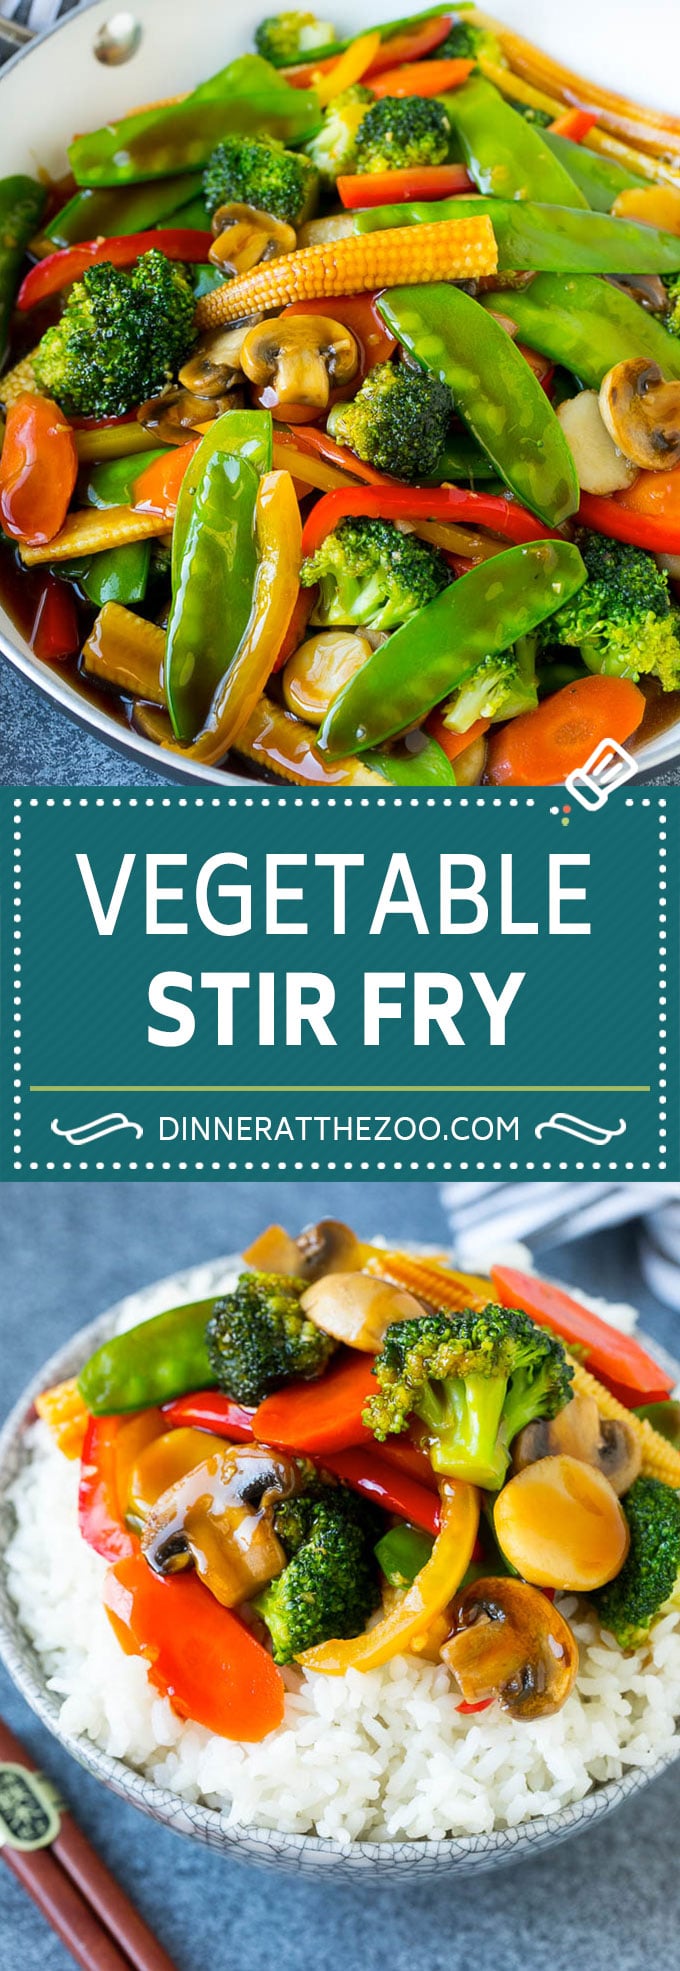 Vegetable Stir Fry Recipe | Veggie Stir Fry | Broccoli Stir Fry #vegetarian #vegetables #broccoli #dinner #dinneratthezoo